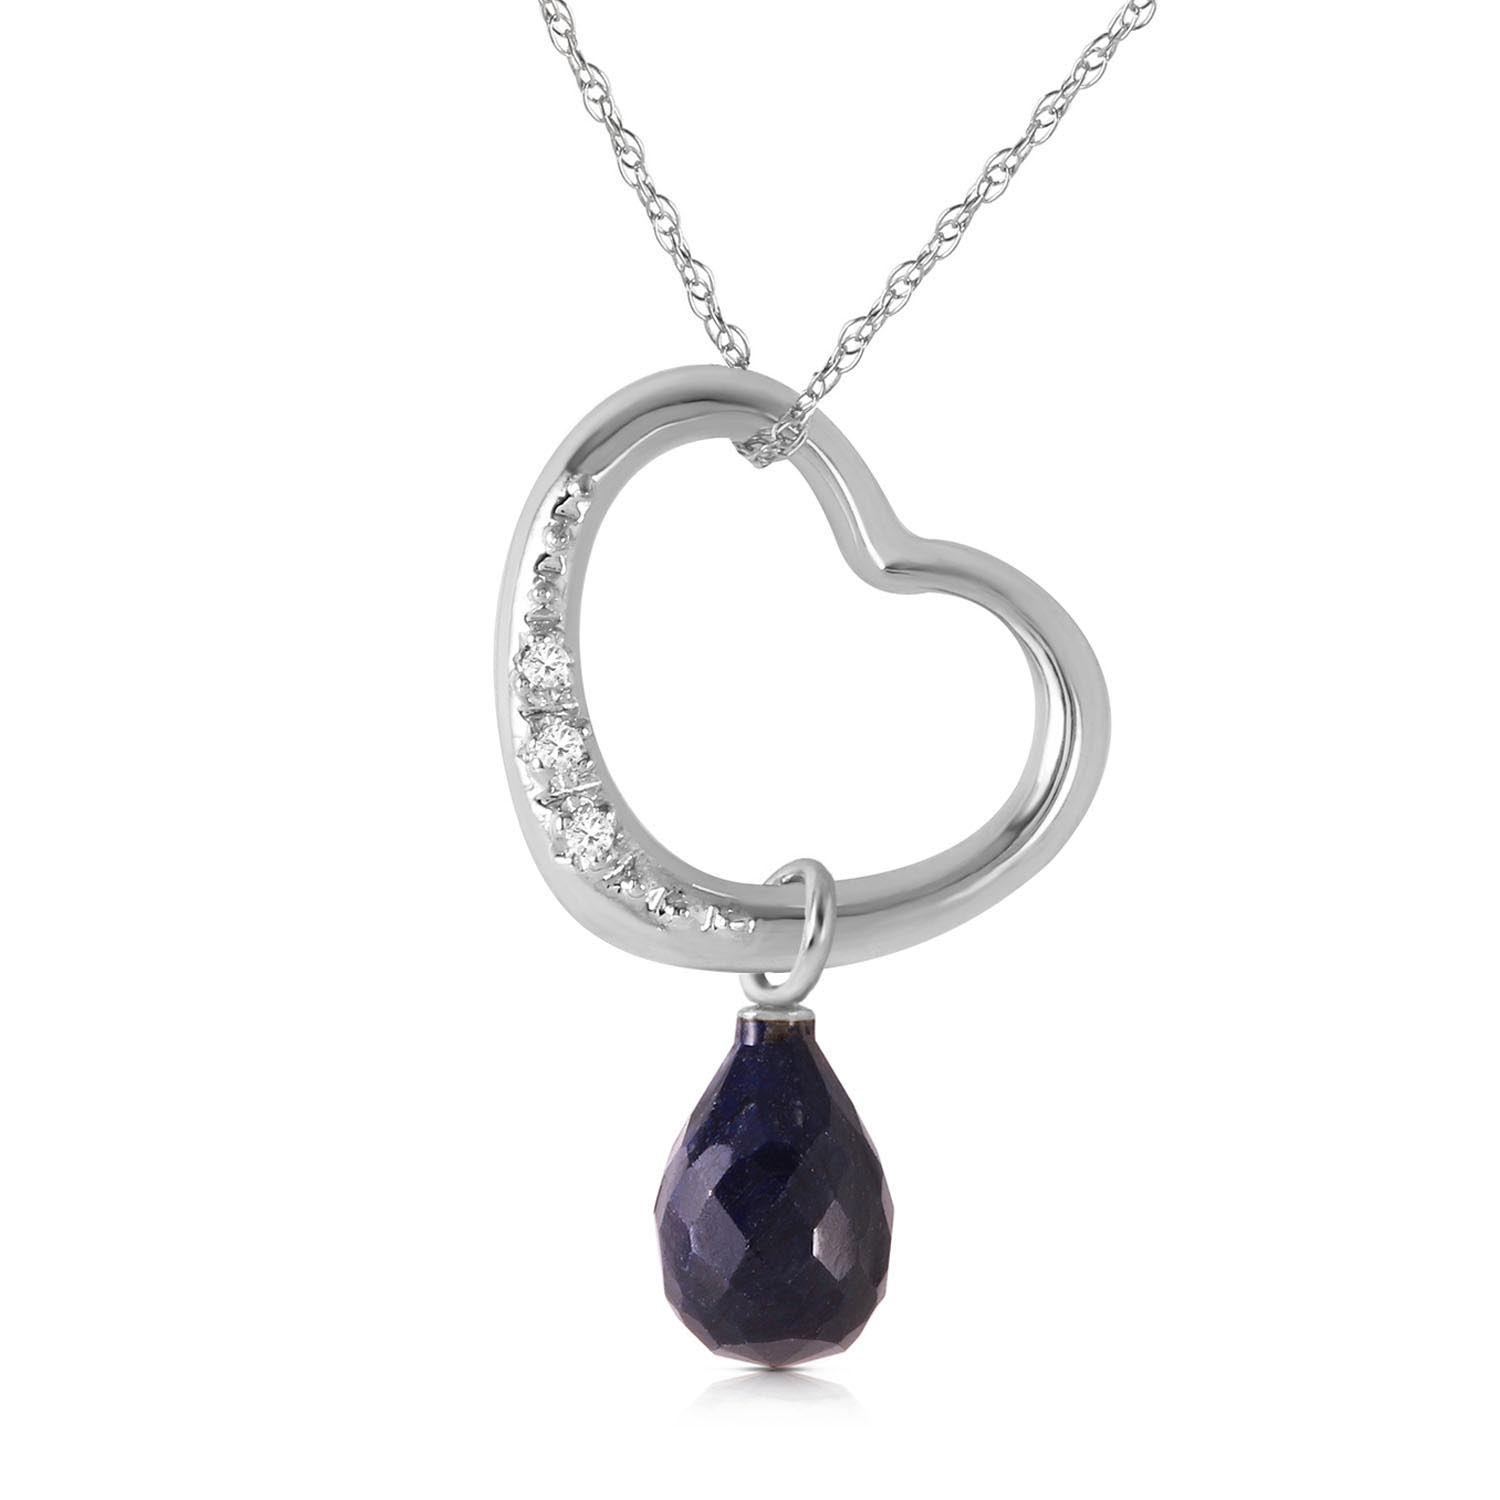 Sapphire & Diamond Heart Pendant Necklace in 9ct White Gold